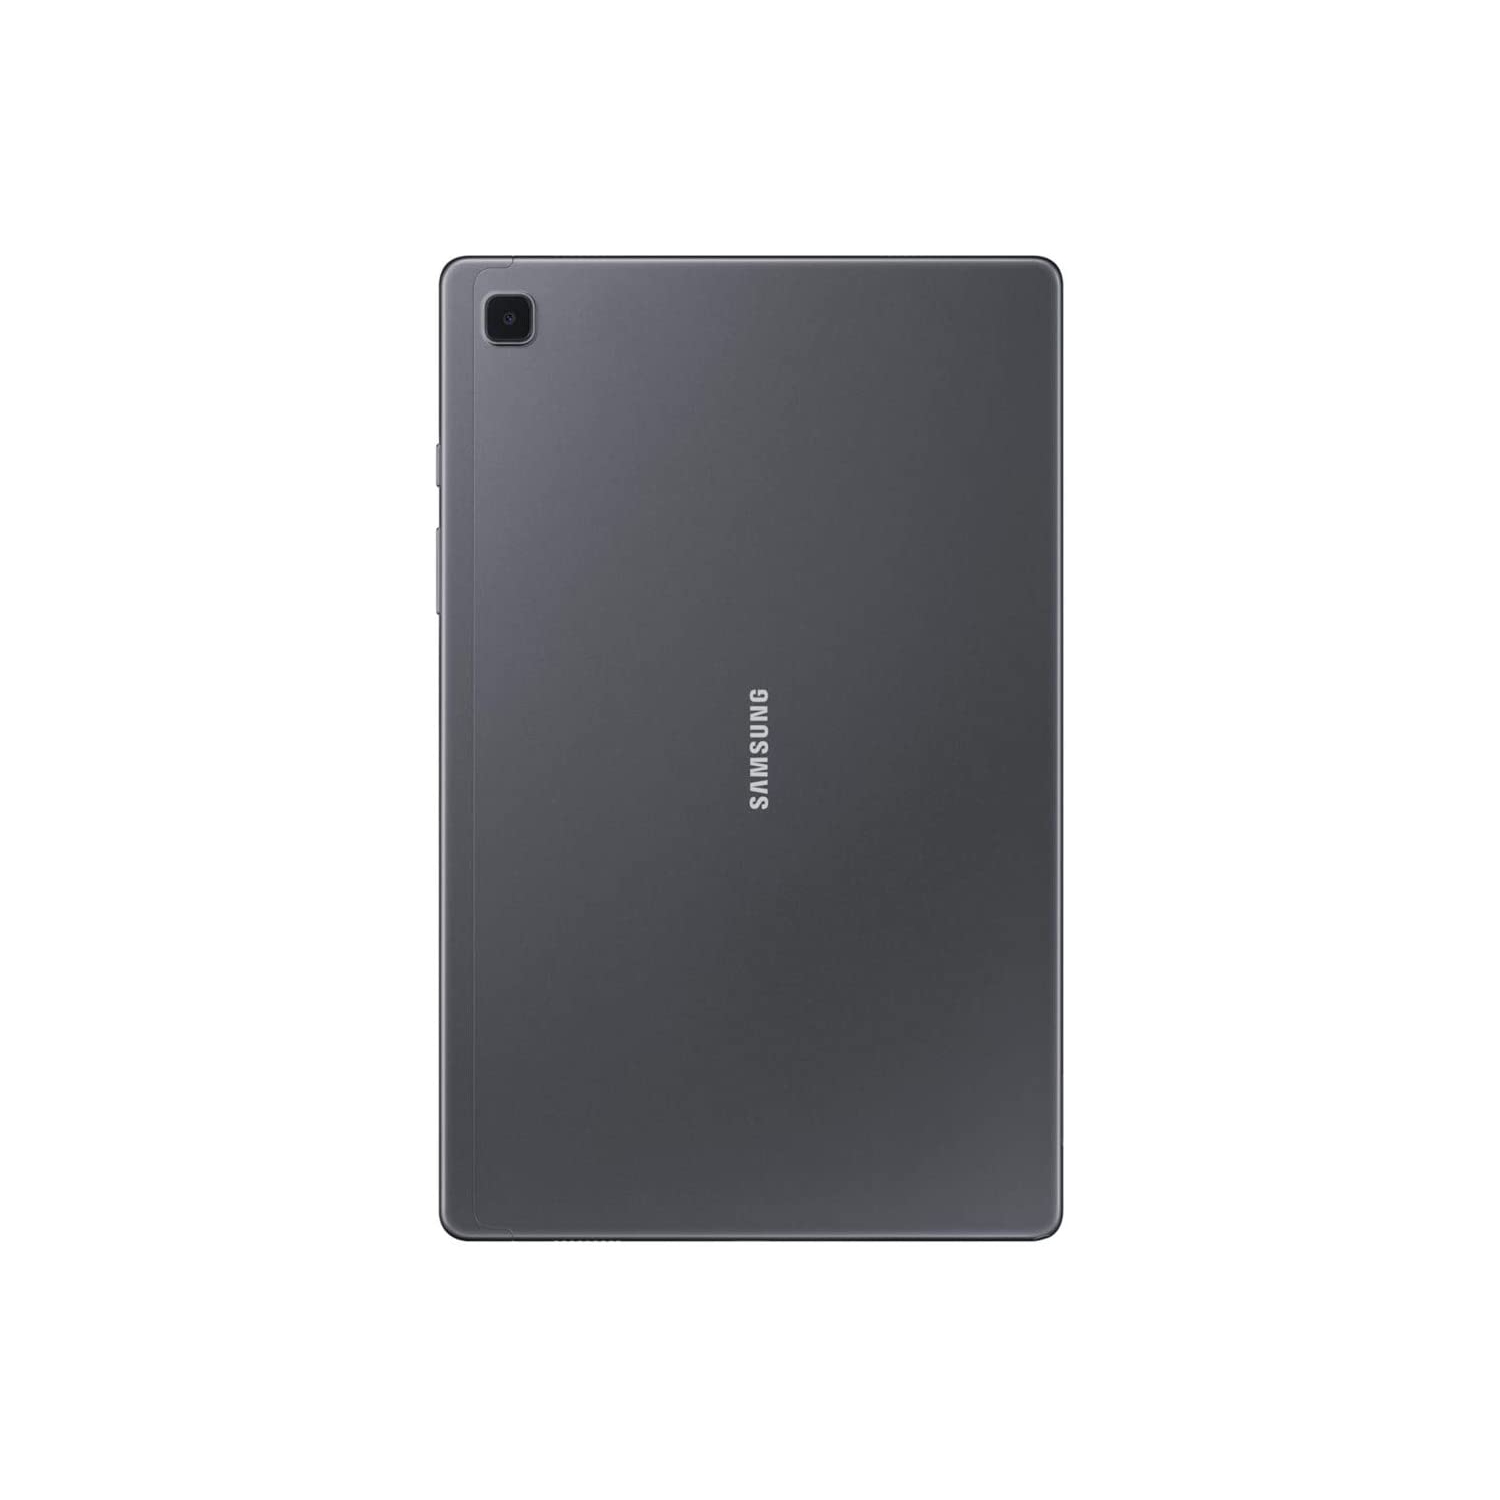 Samsung Galaxy Tab A7 (SM-T505) (32GB/3GB, Dark Gray) - Brand New